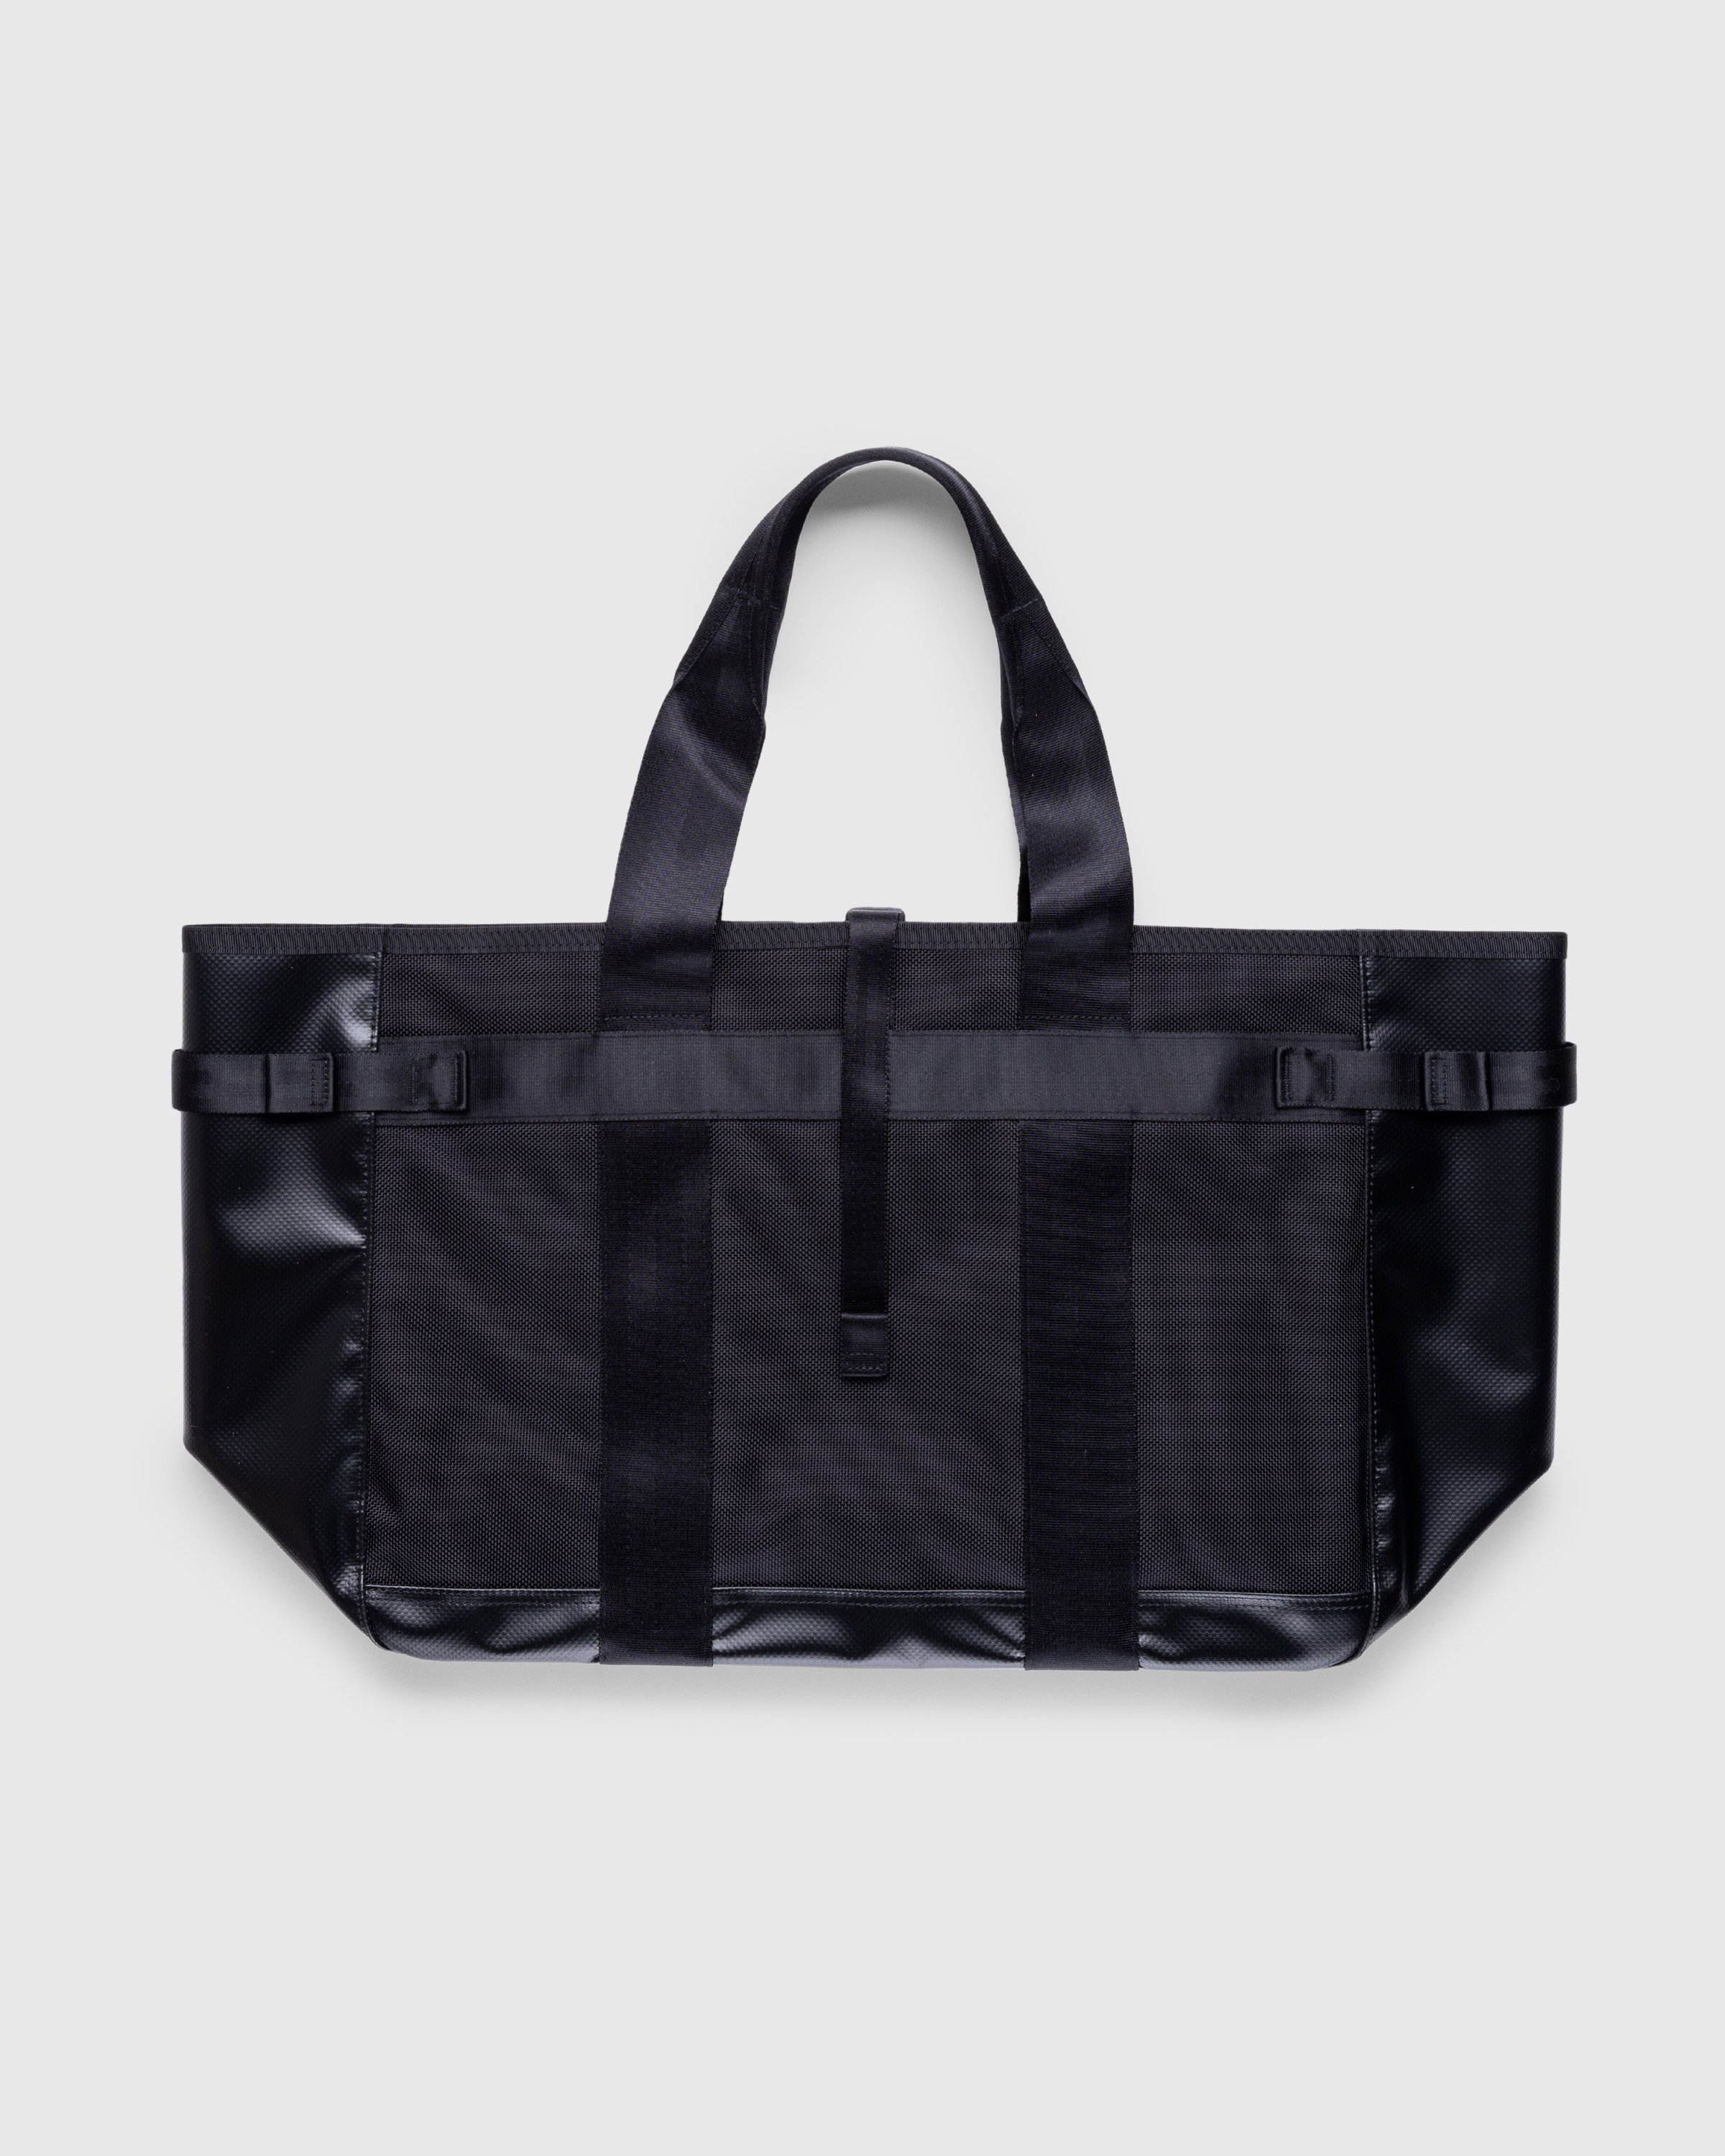 Porter-Yoshida & Co. - Heat Tote Bag Black - Accessories - Black - Image 2